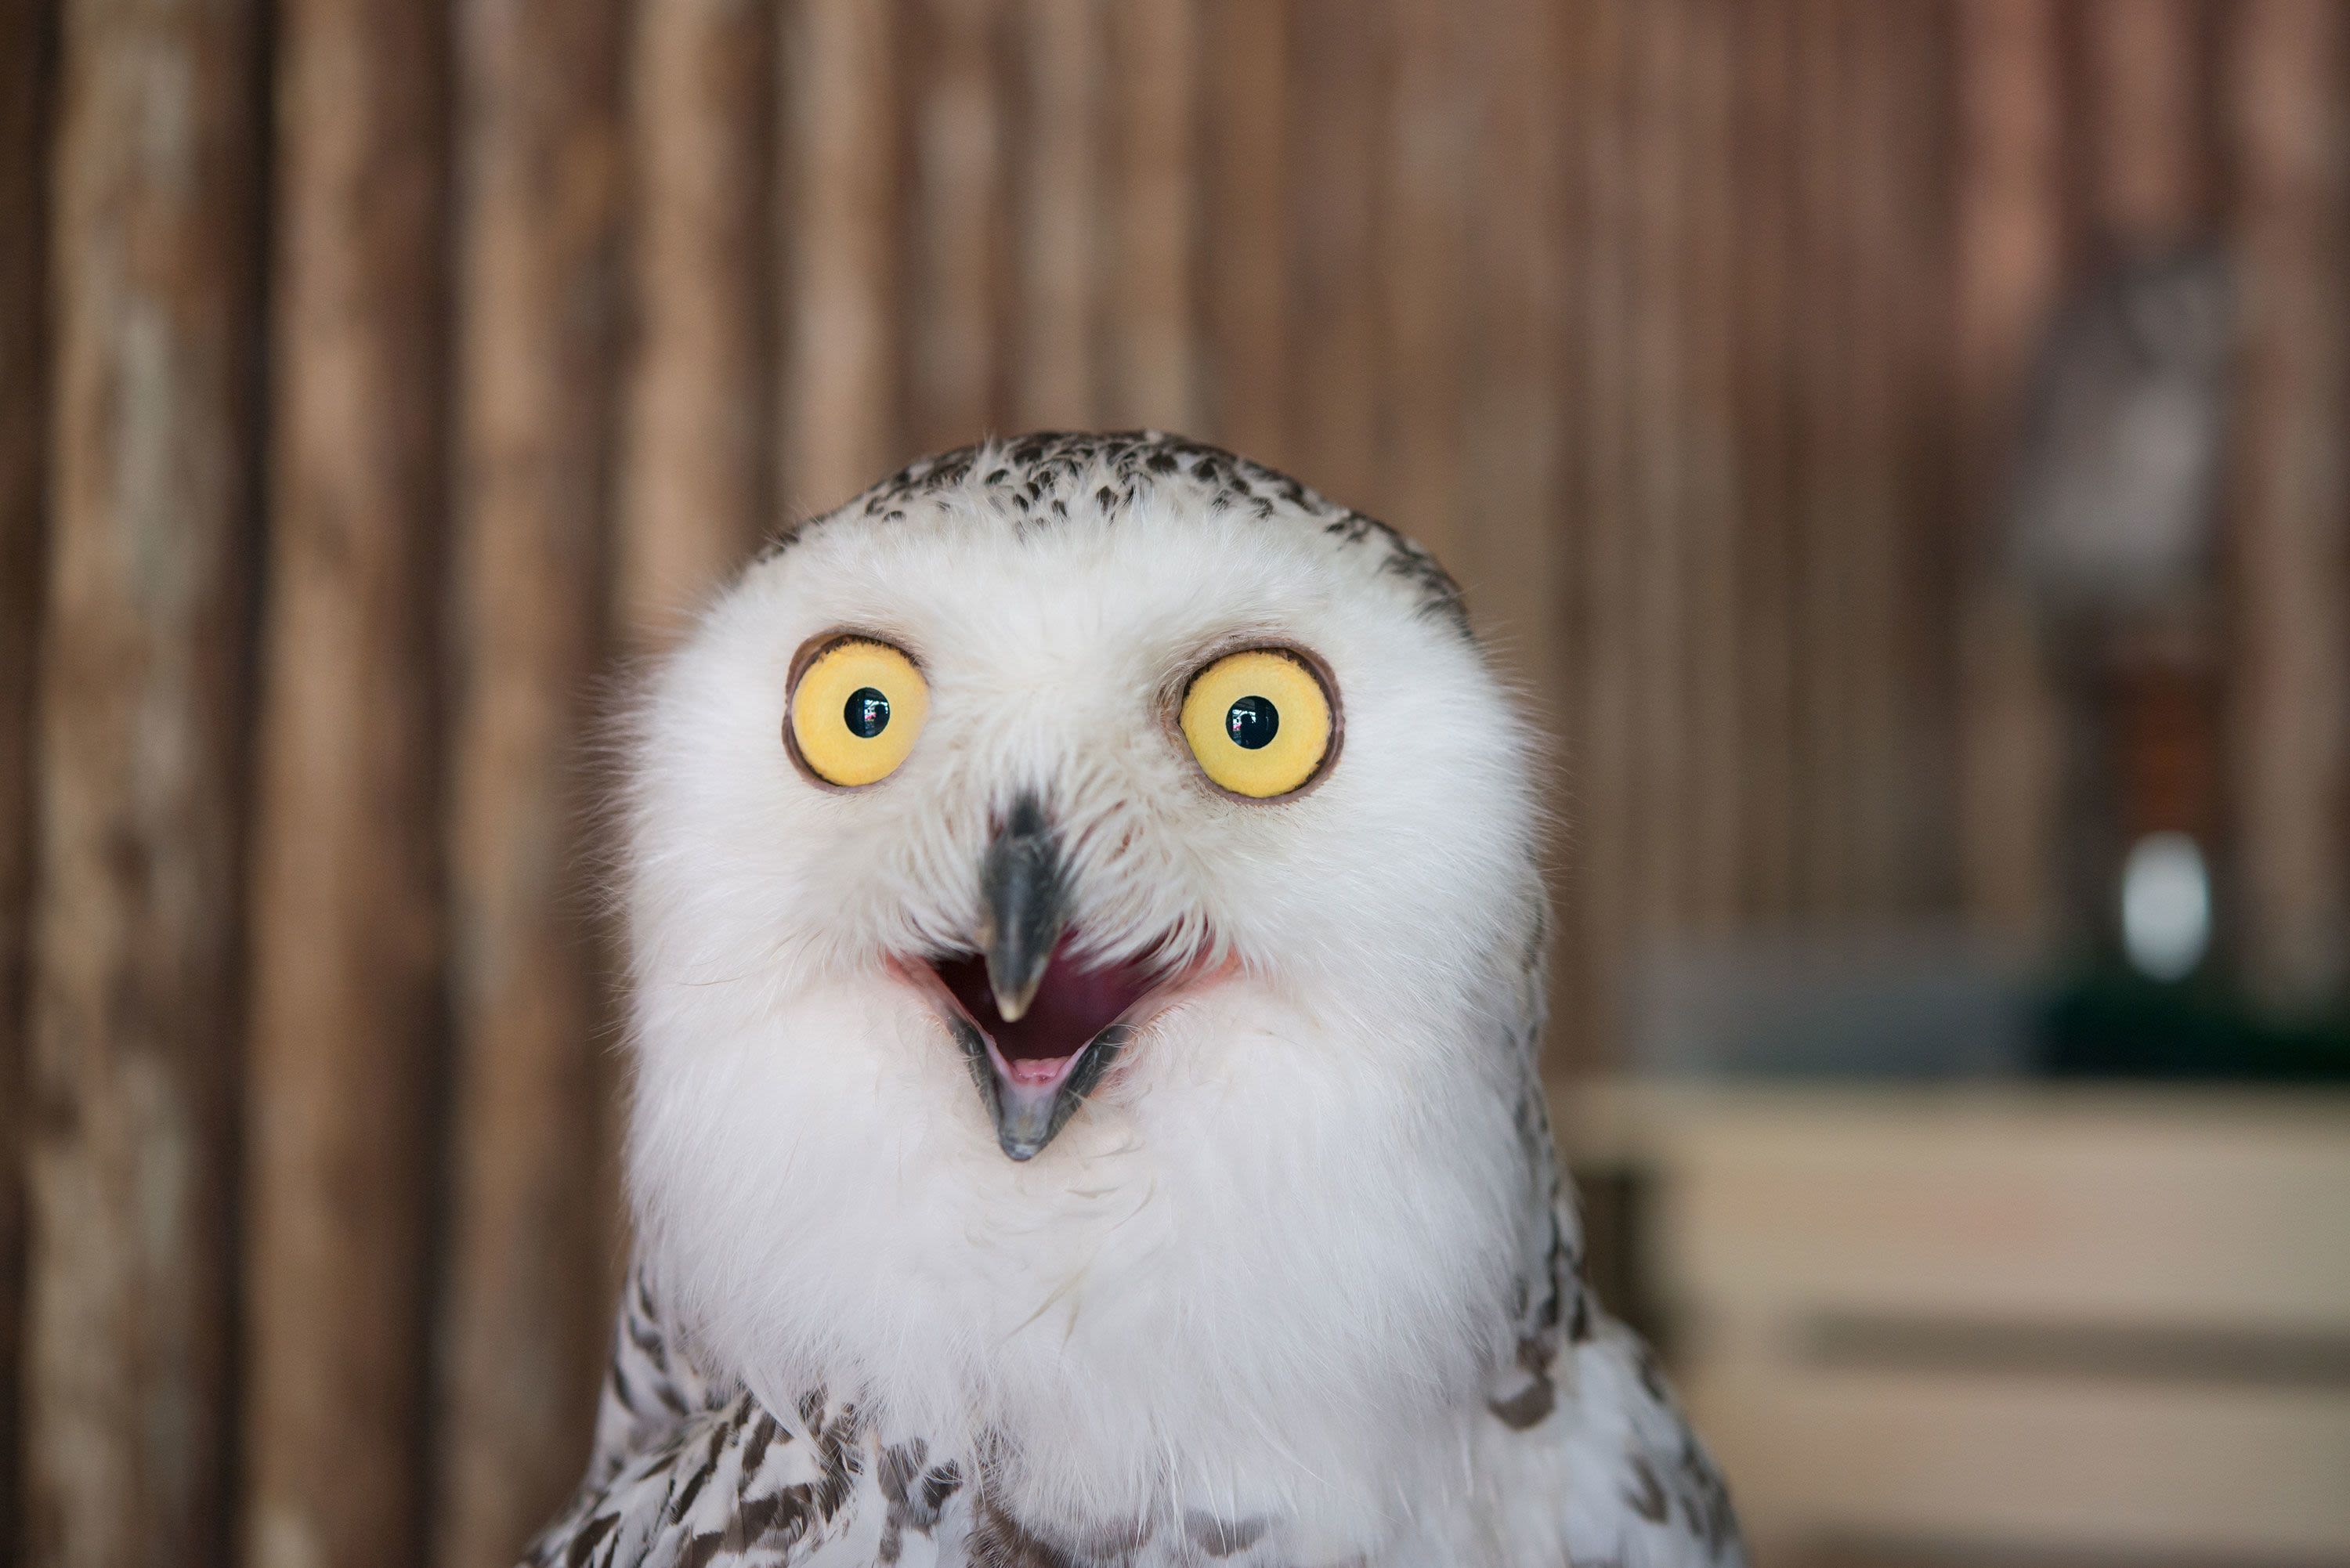 Superb Owl meme: Owl photos are flooding the internet ahead of the